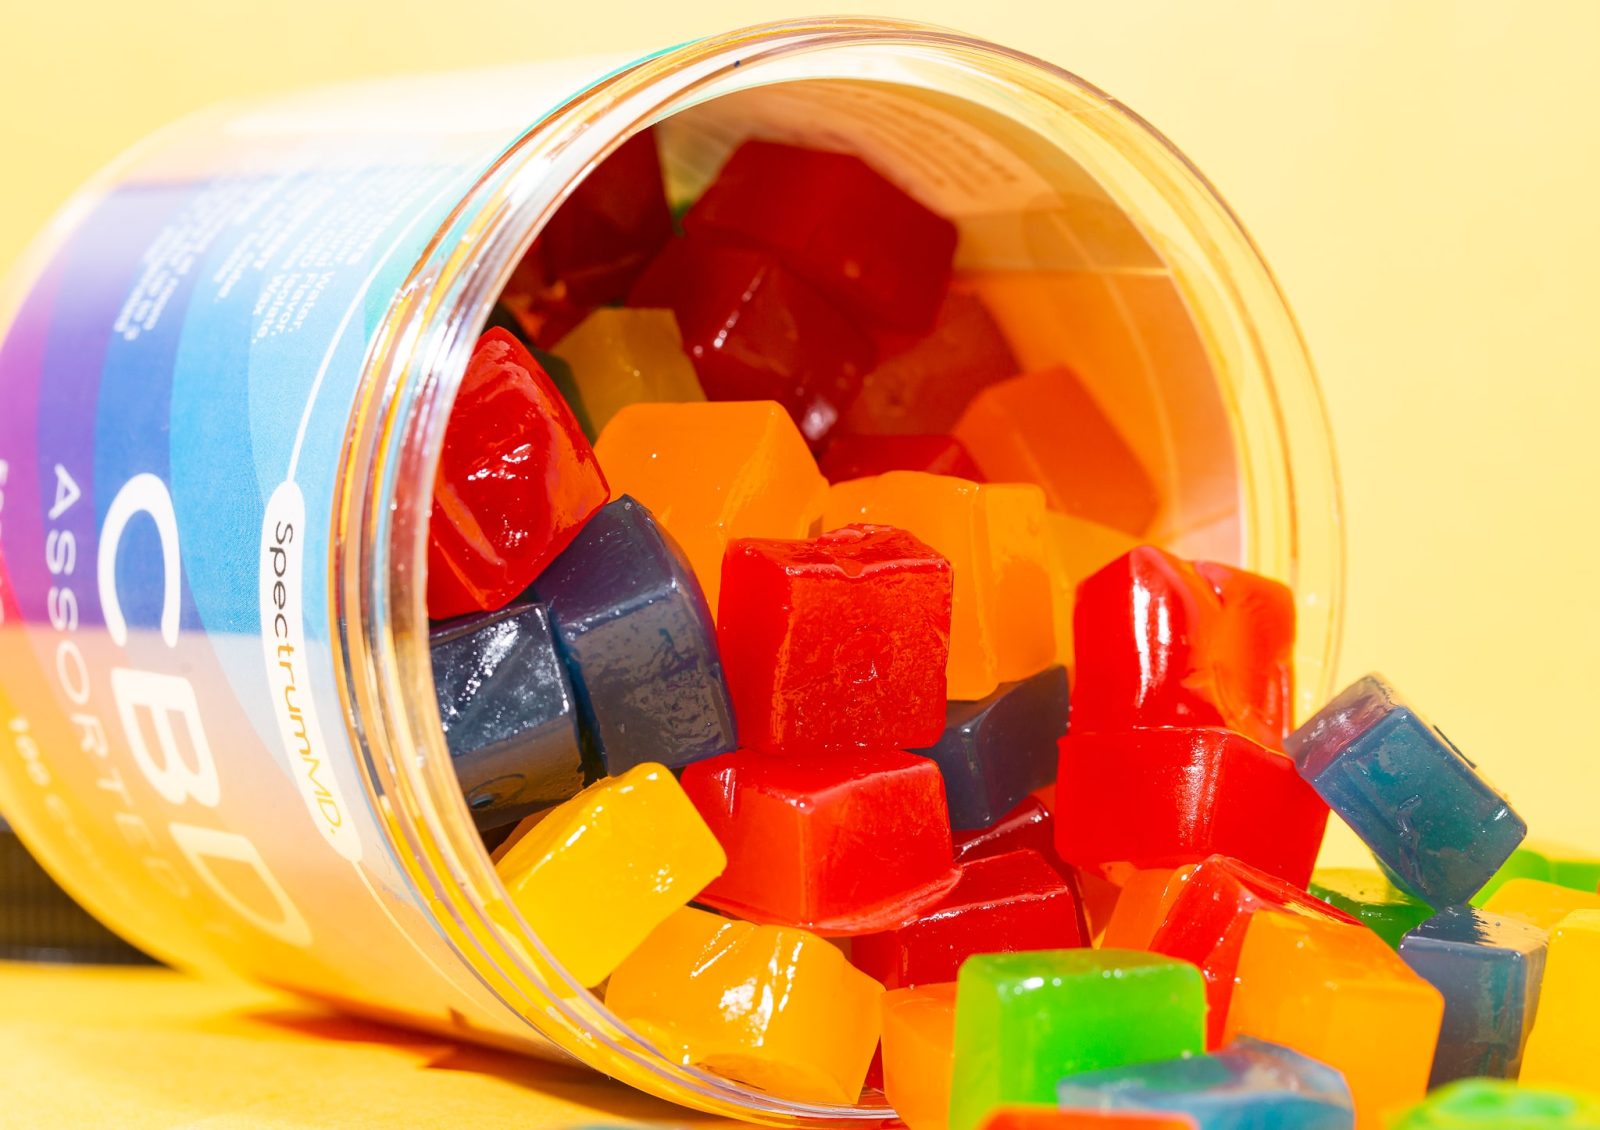 Spectrum MD - Daily Dose Gummies 100 x 5mg CBD (500mg CBD per Pack)